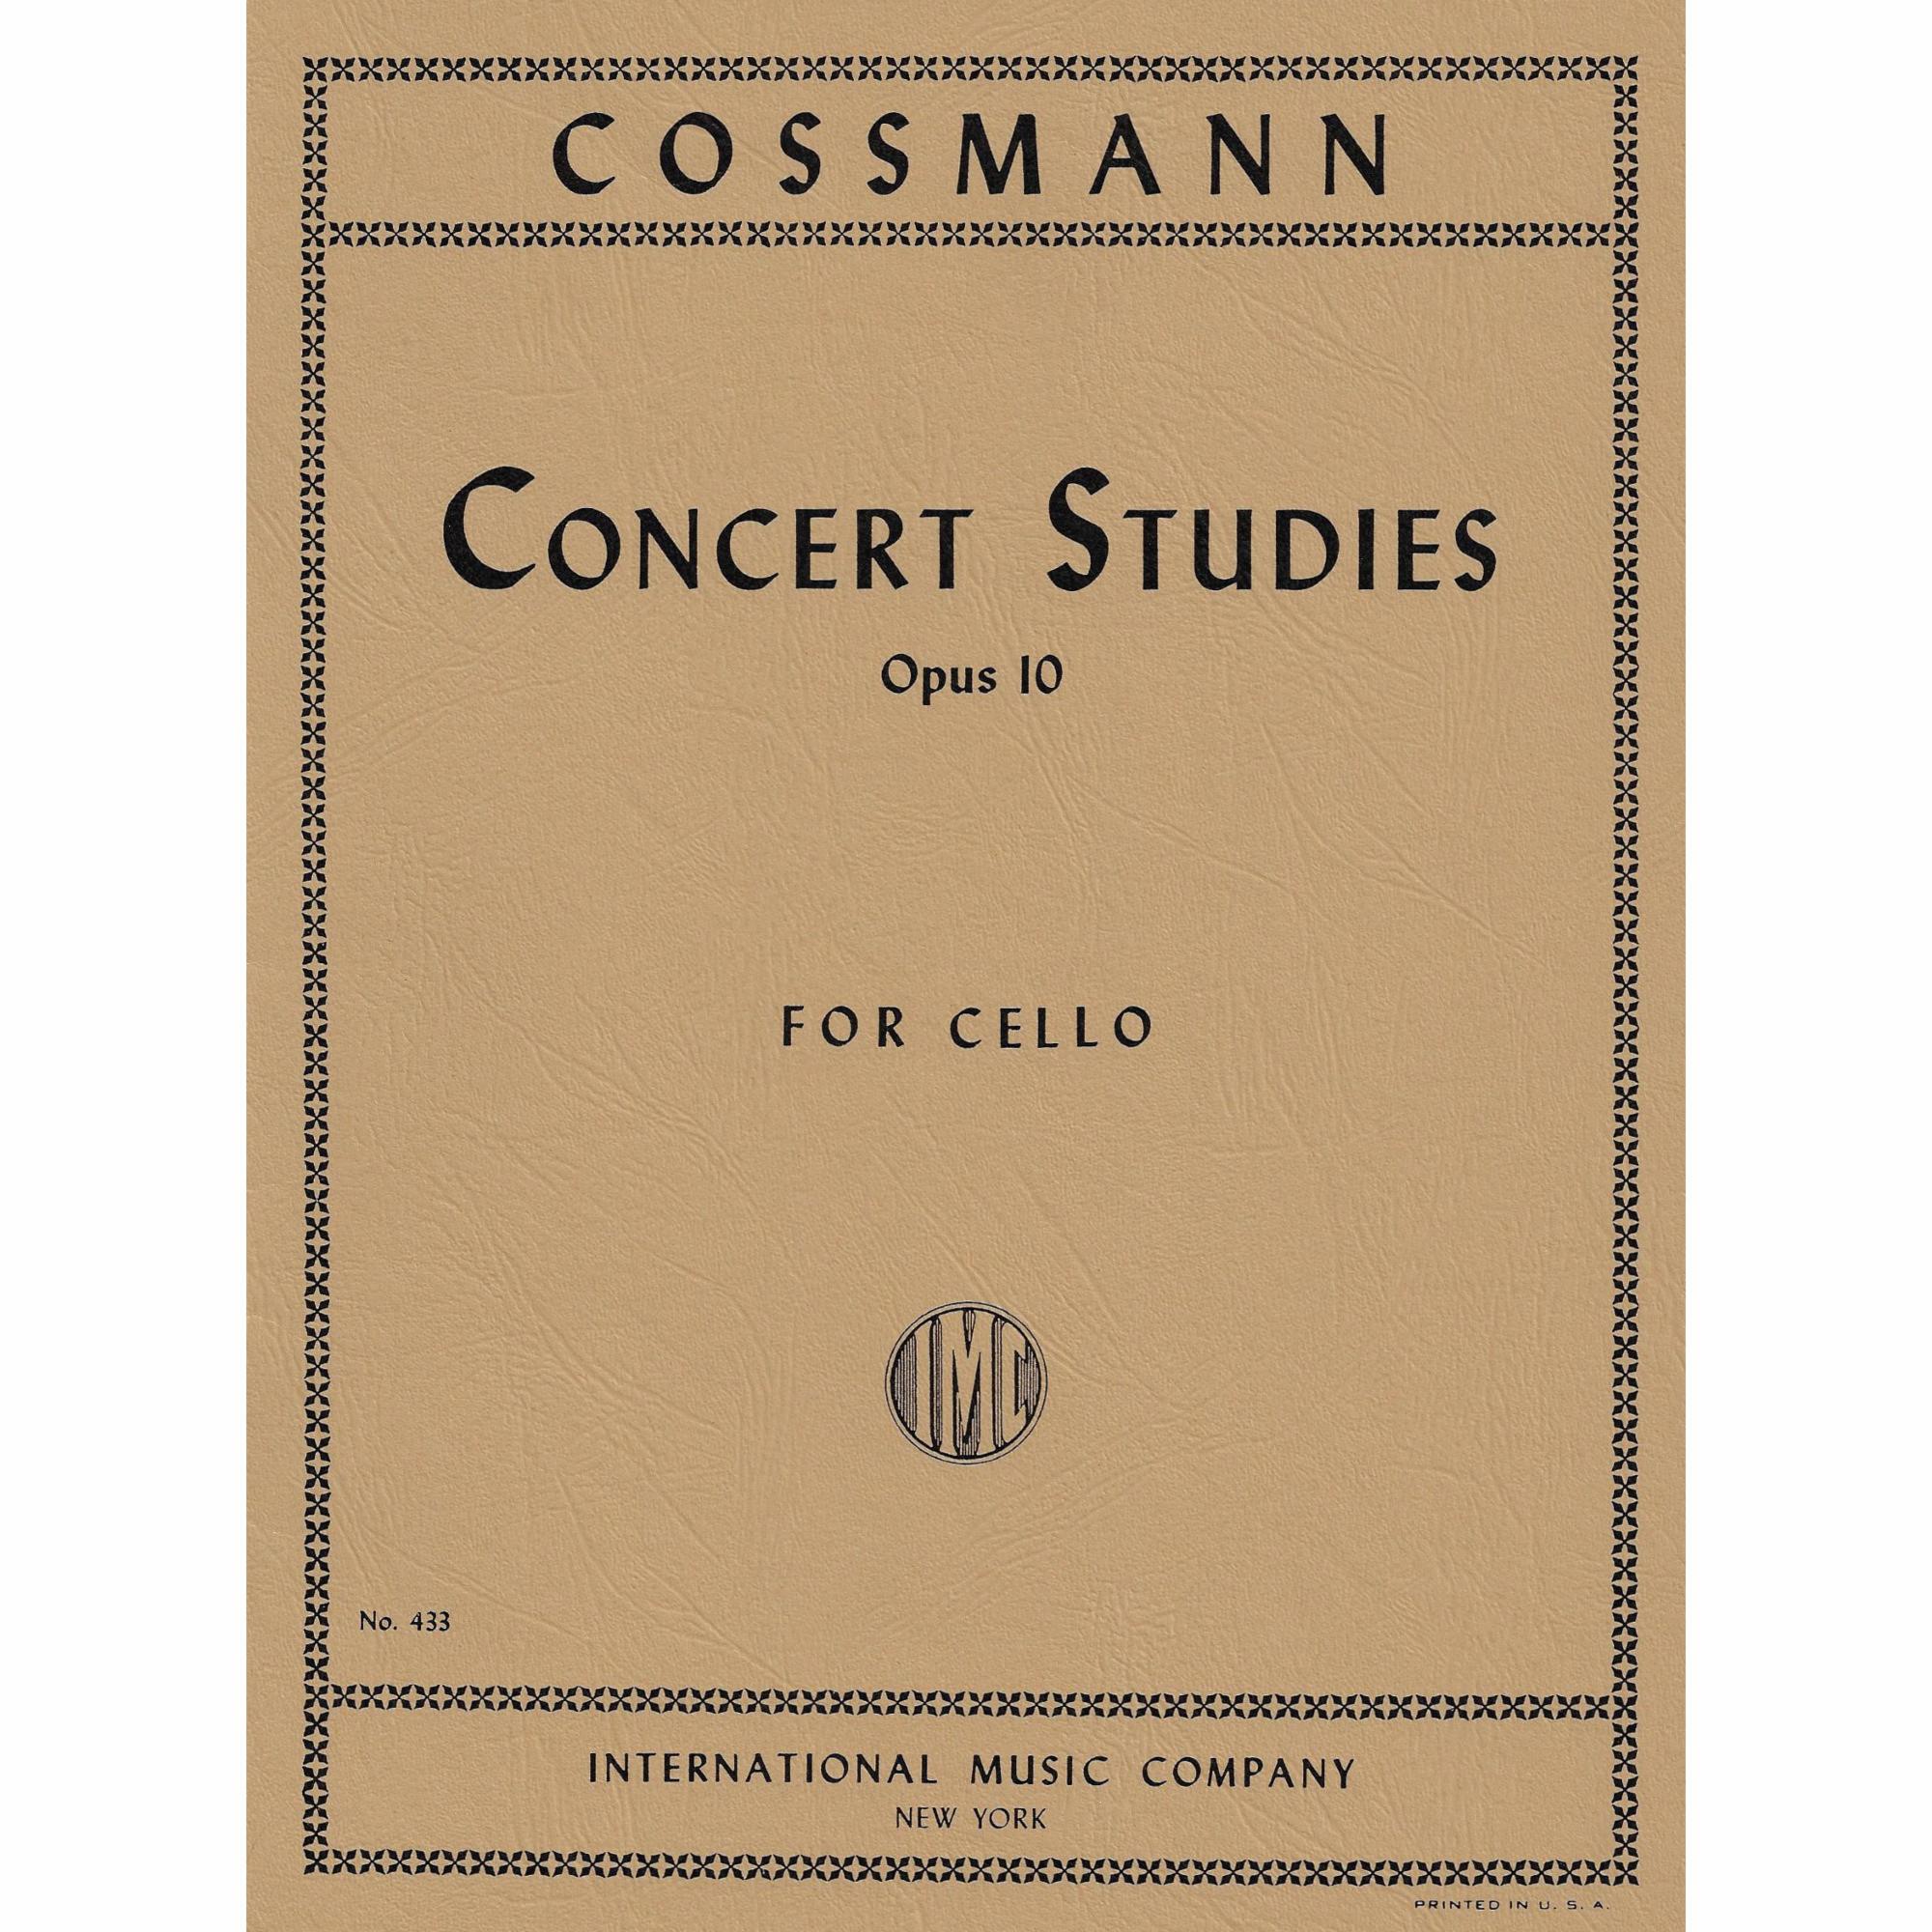 Cossmann -- Concert Studies, Op. 10 for Cello